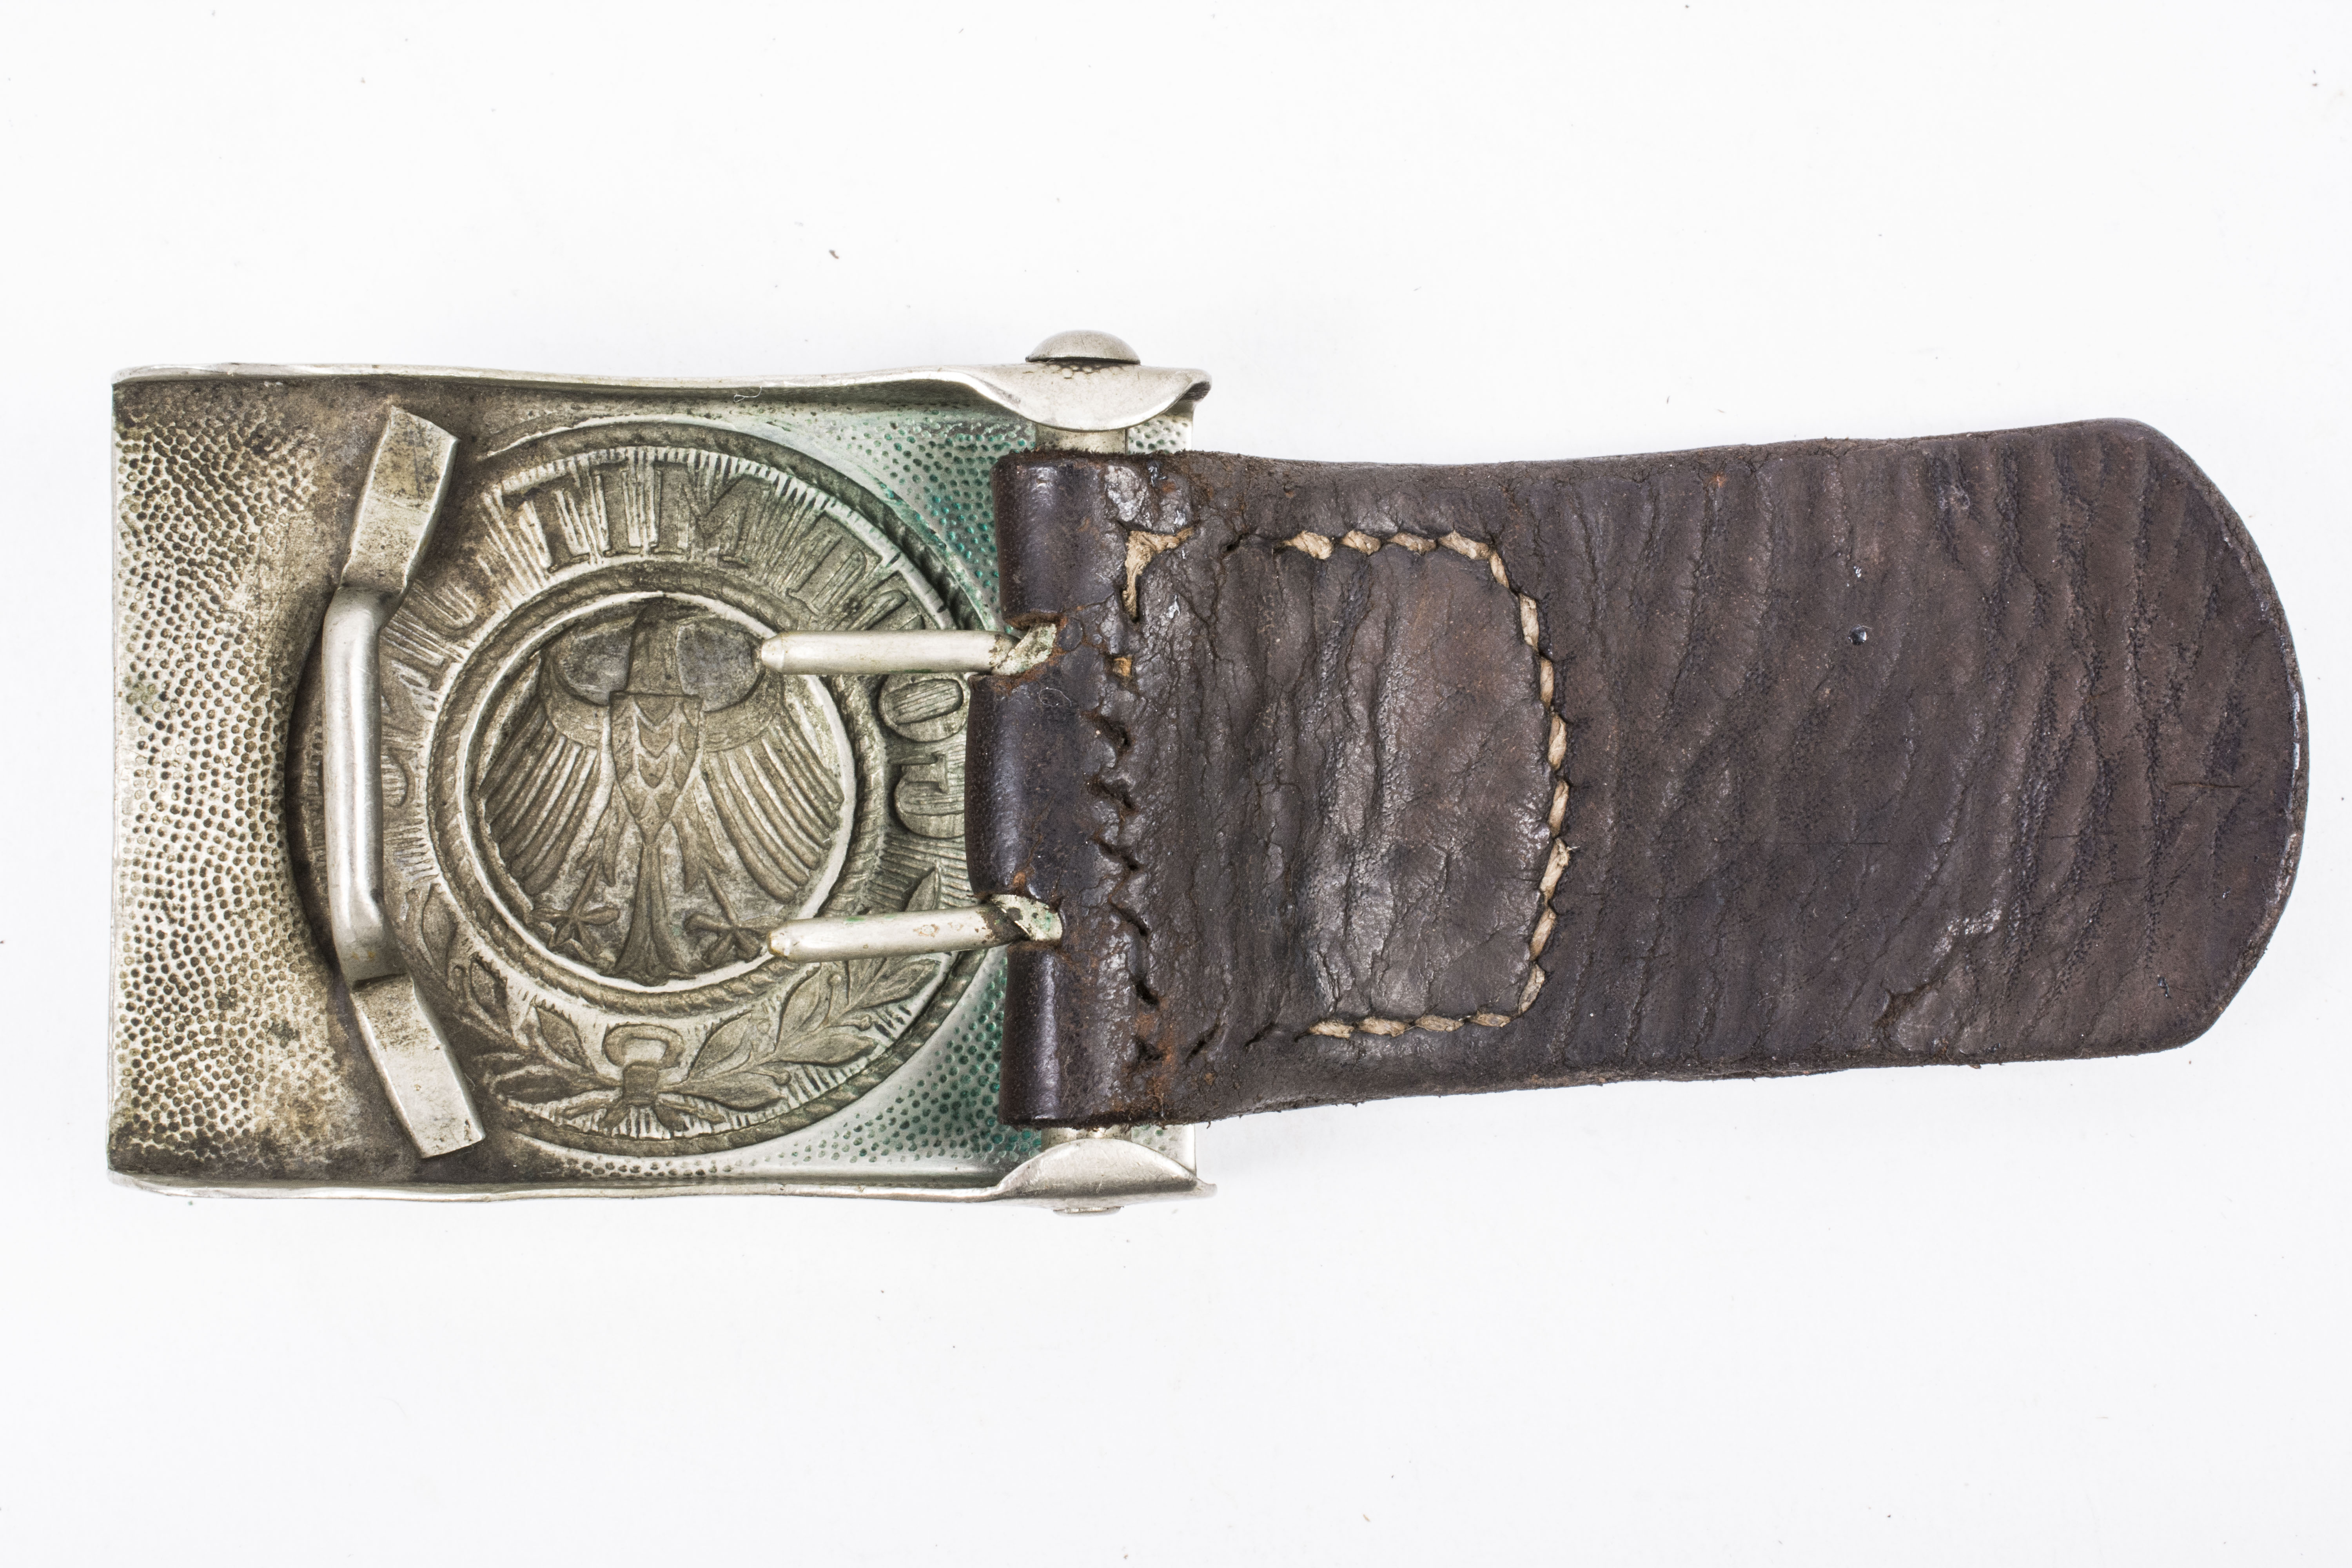 Tabbed Reichswehr belt buckle unit marked 3.Esk.R.R. – fjm44